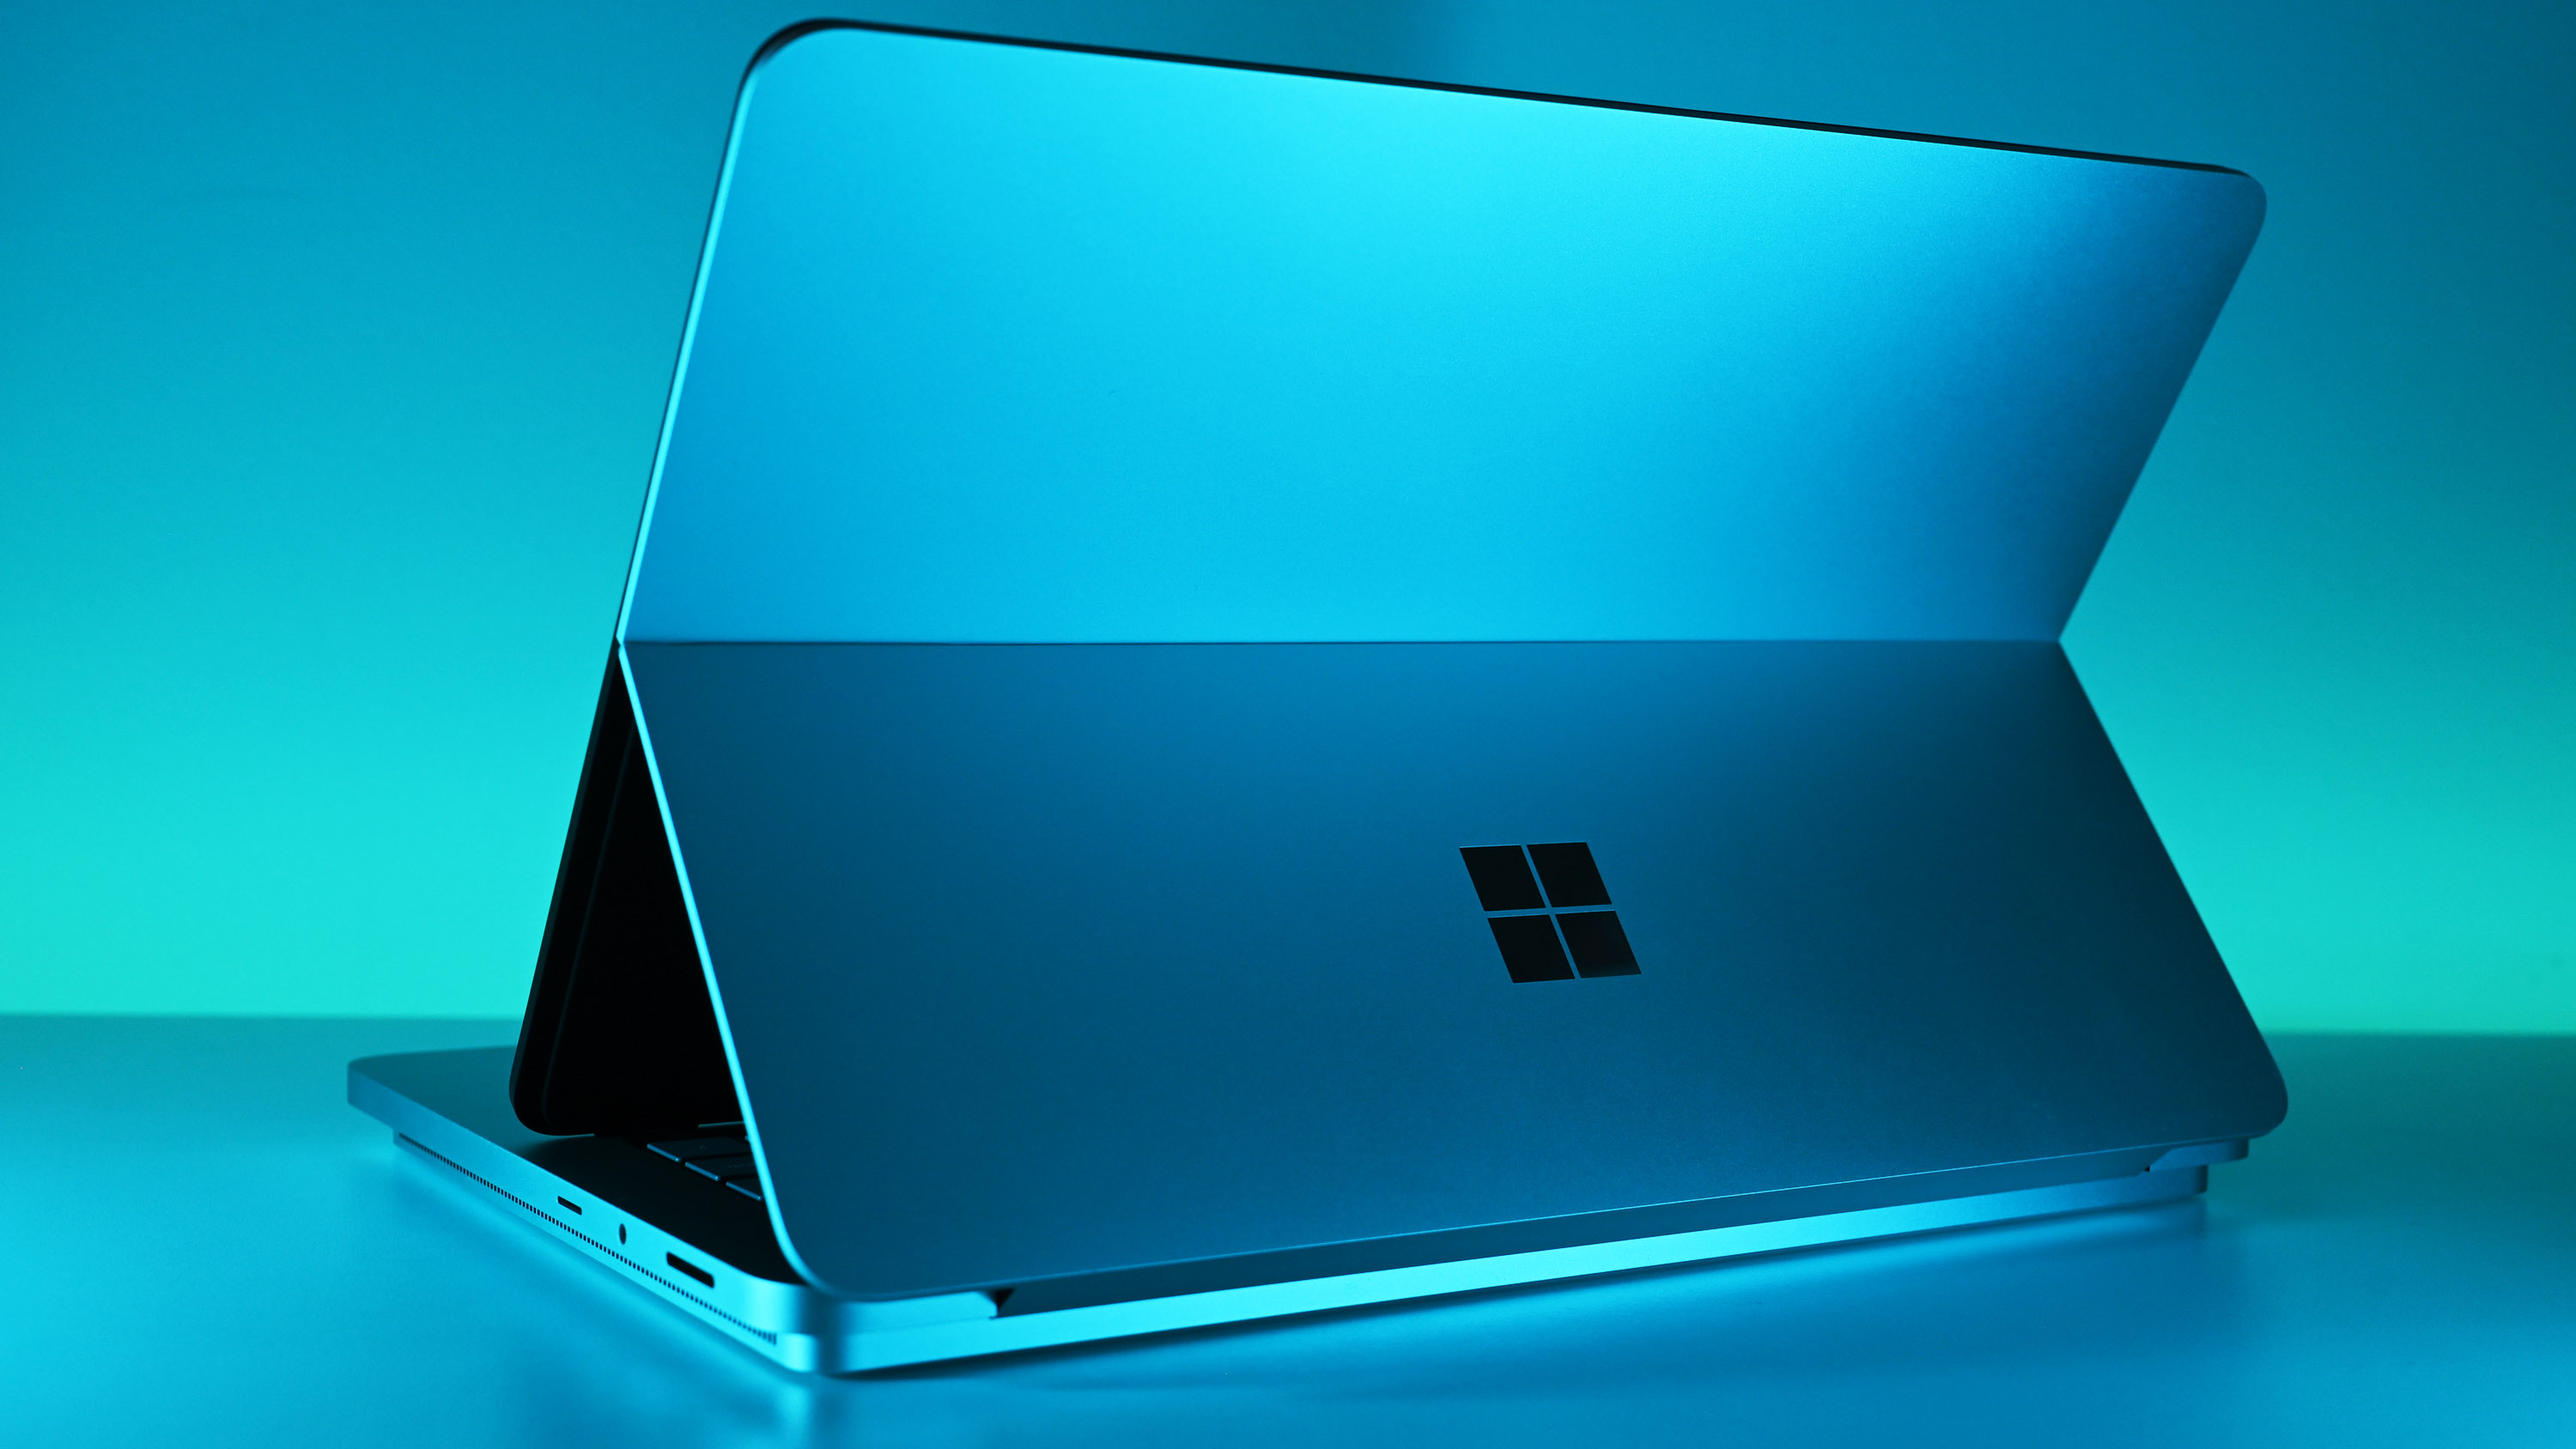  Microsoft Surface Studio (1st Gen) (Intel Core i7